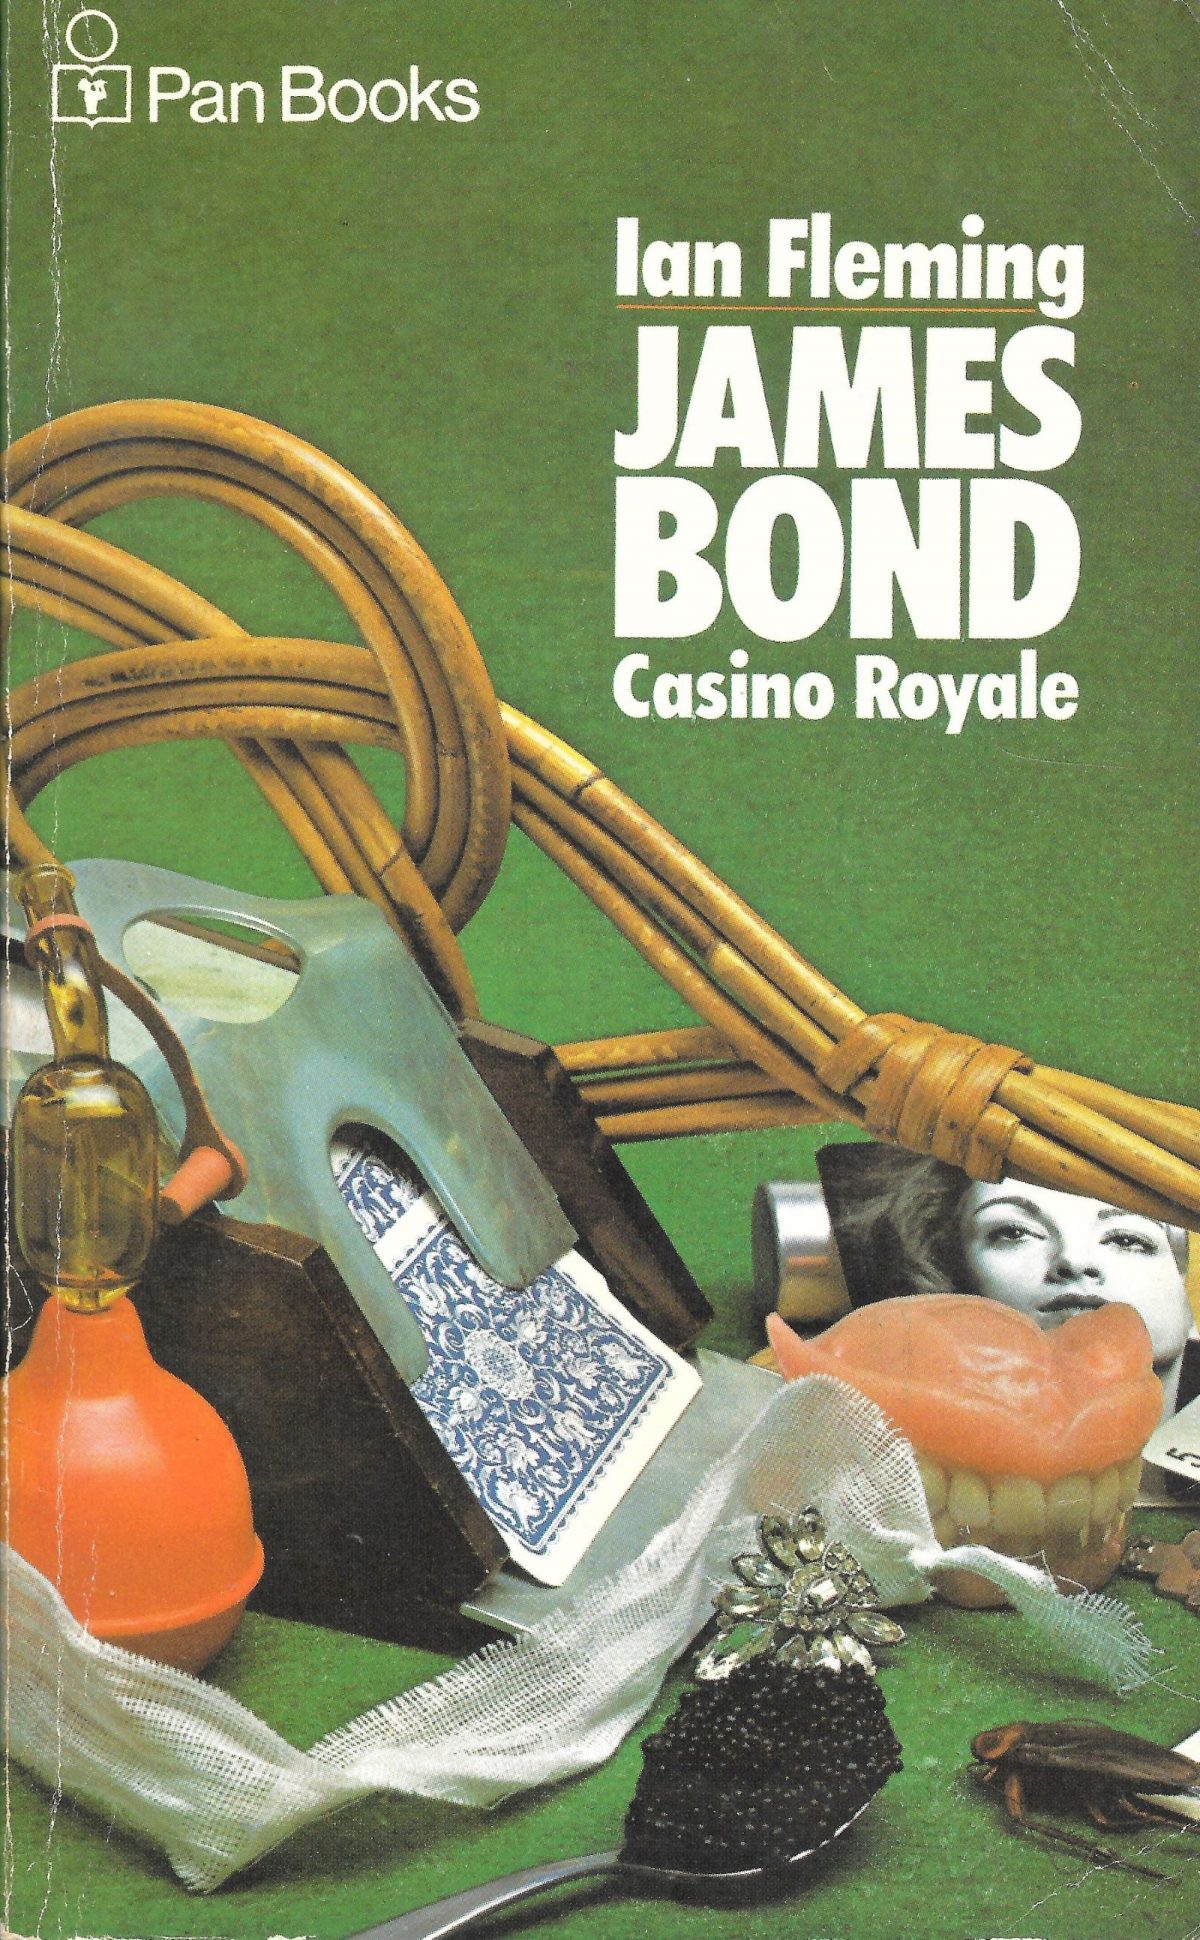 James Bond, Ian Fleming, Raymond Chandler, Philip Marlowe, fiction, crime fiction, spy fiction, books, literature, films